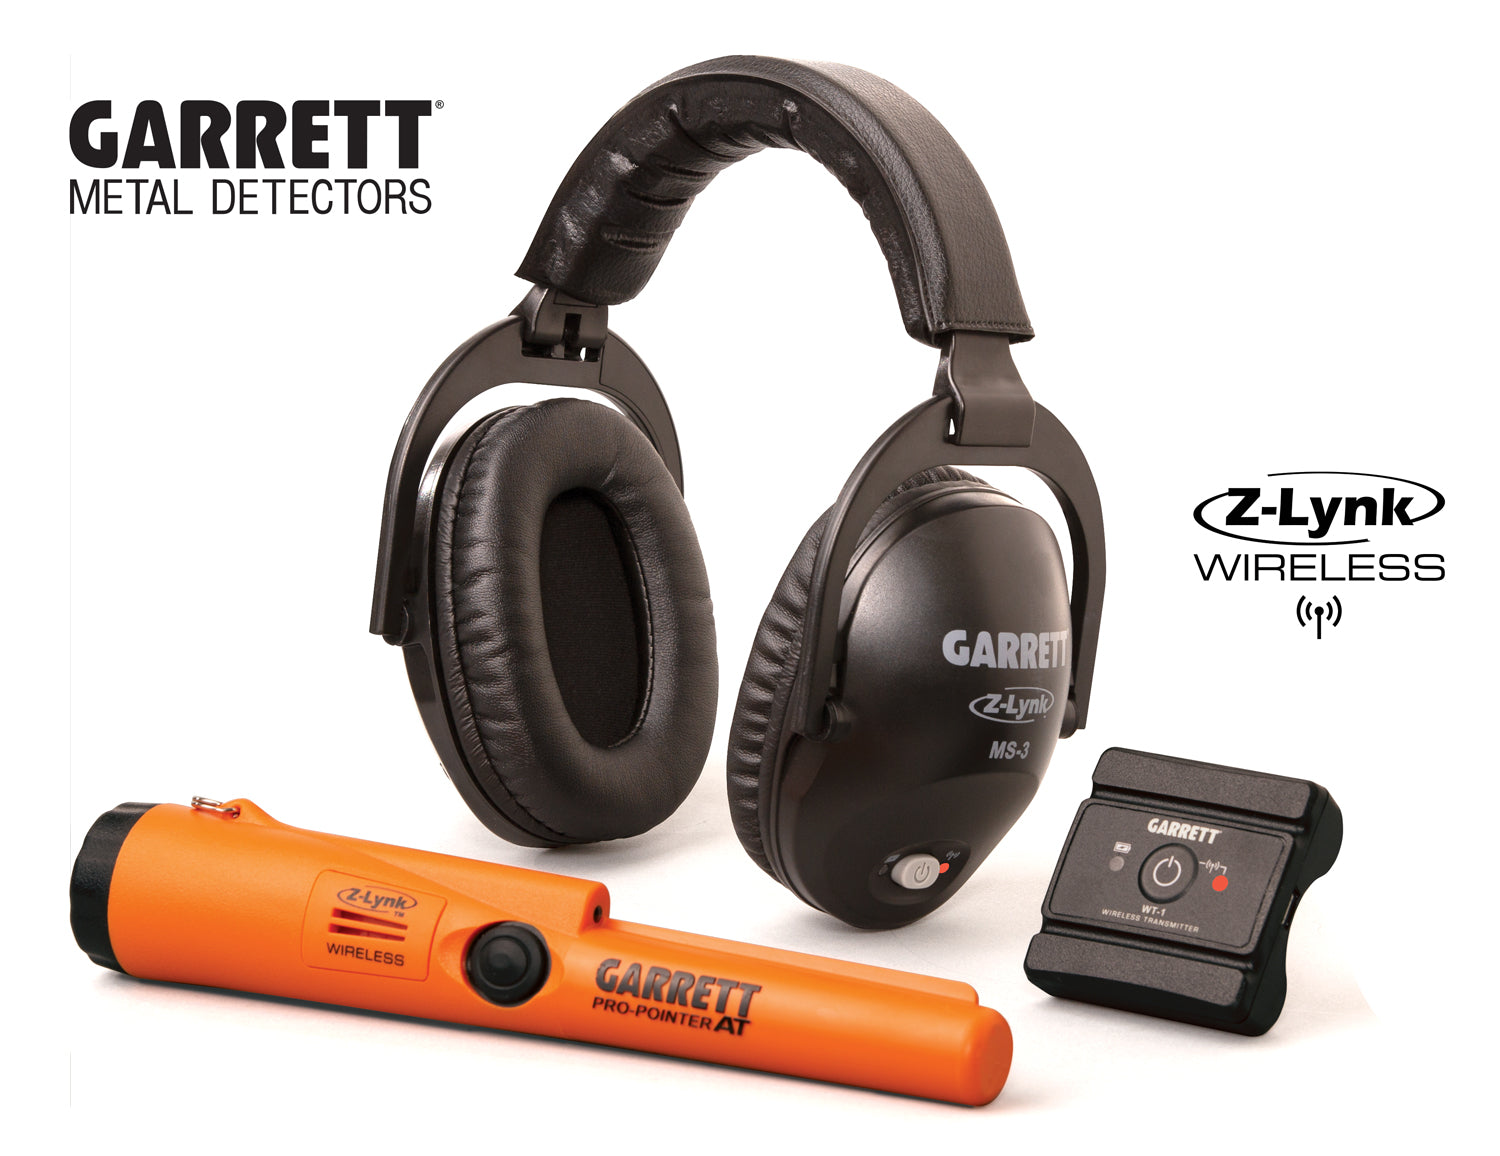 Garrett Z-Lynk Wireless System MS-3 Headphones. Propointer AT Z-Lynk